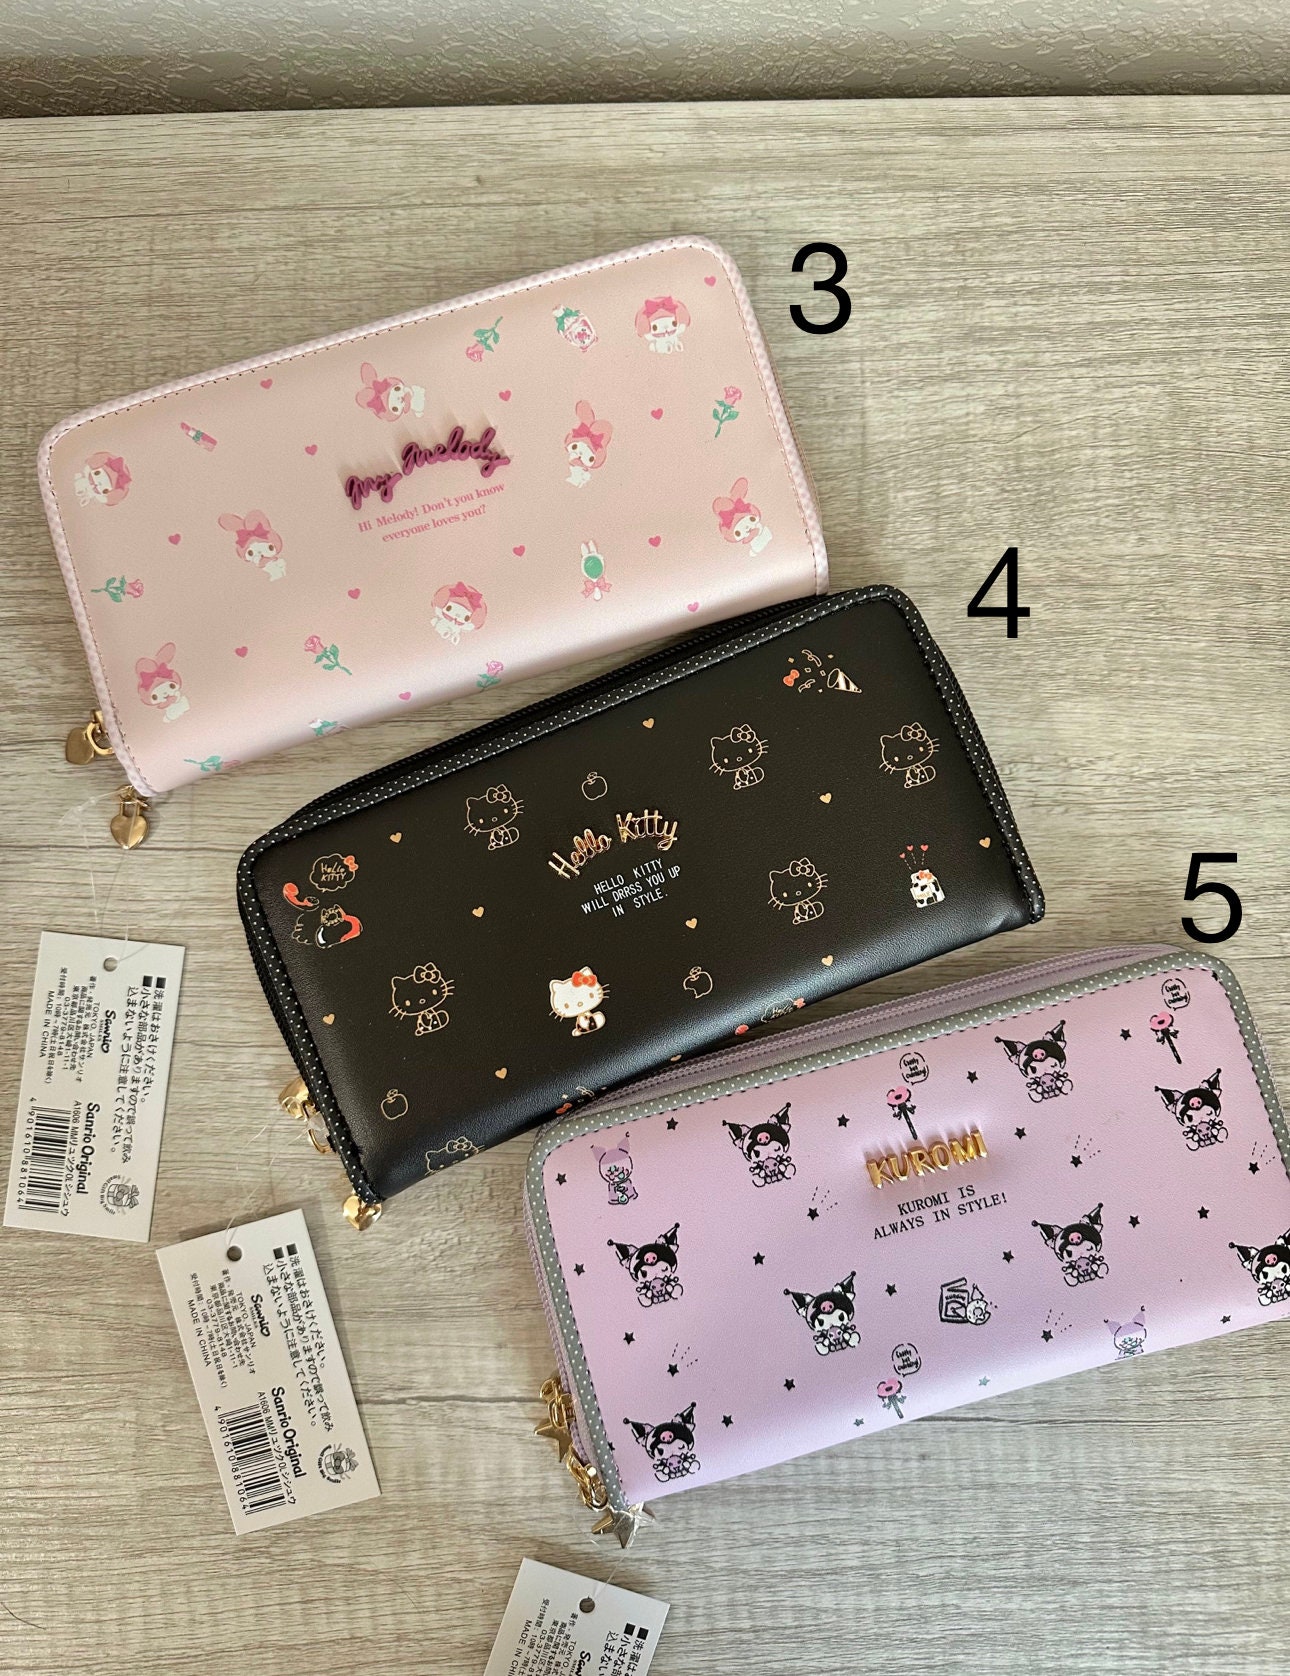 Hello Kitty Purse Handbags Sanrio Bags Cute Walet My Melody Pouch Kuro